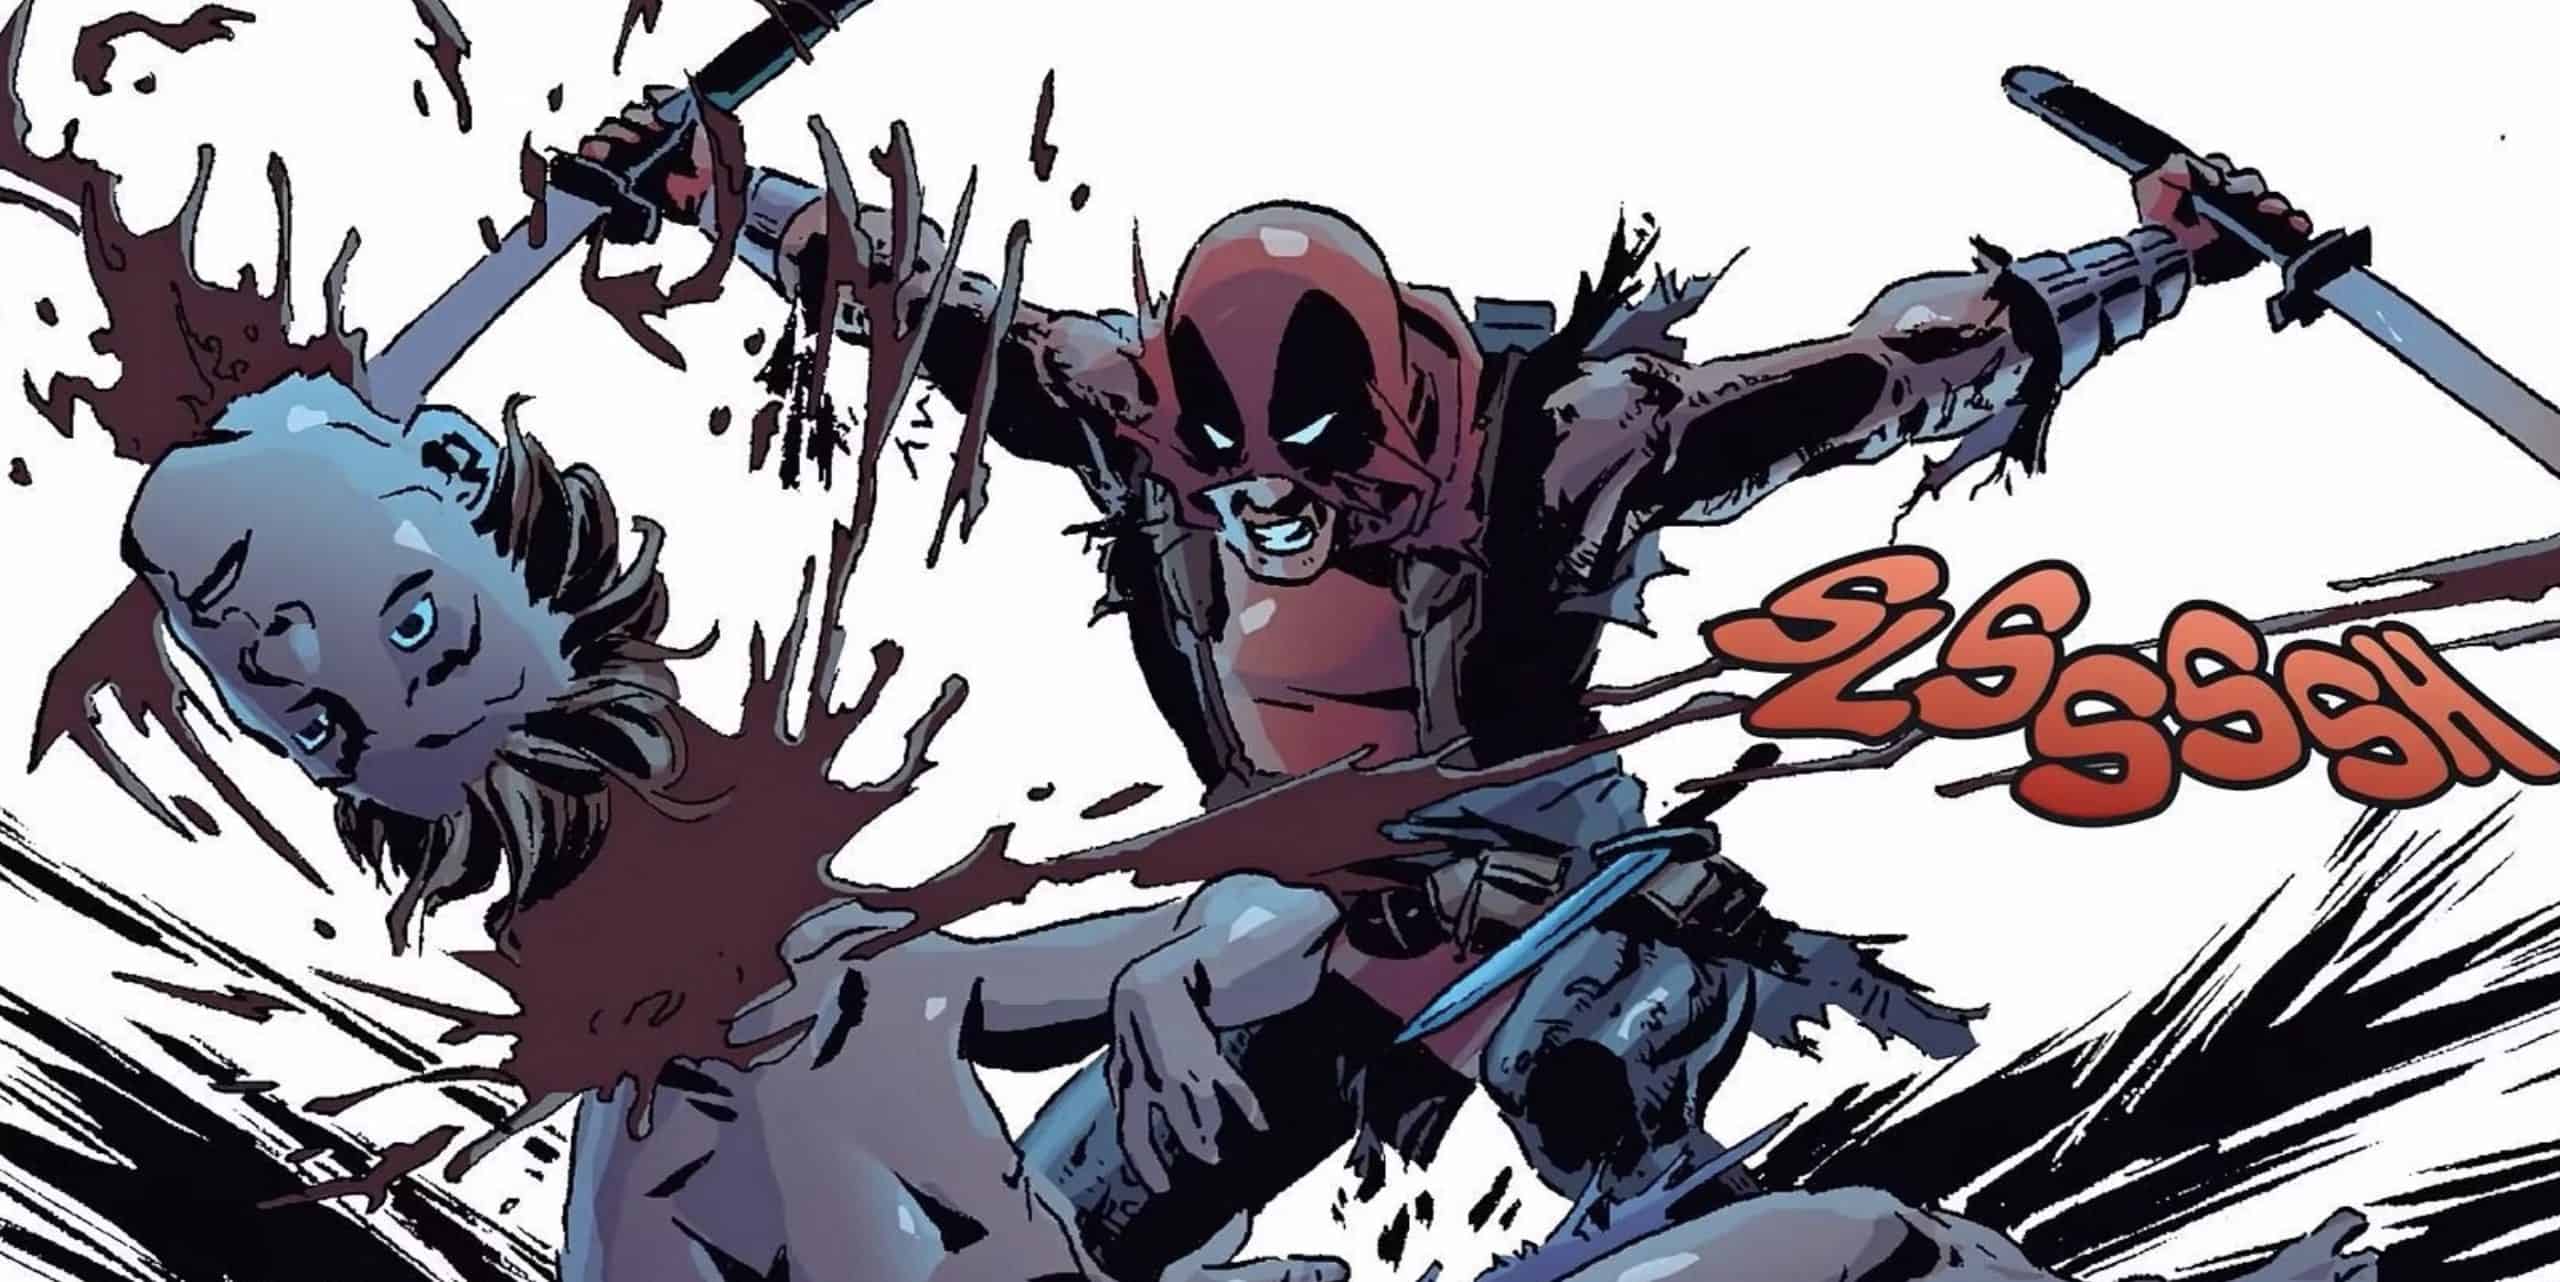 Why Did Deadpool Kill The Marvel Universe?